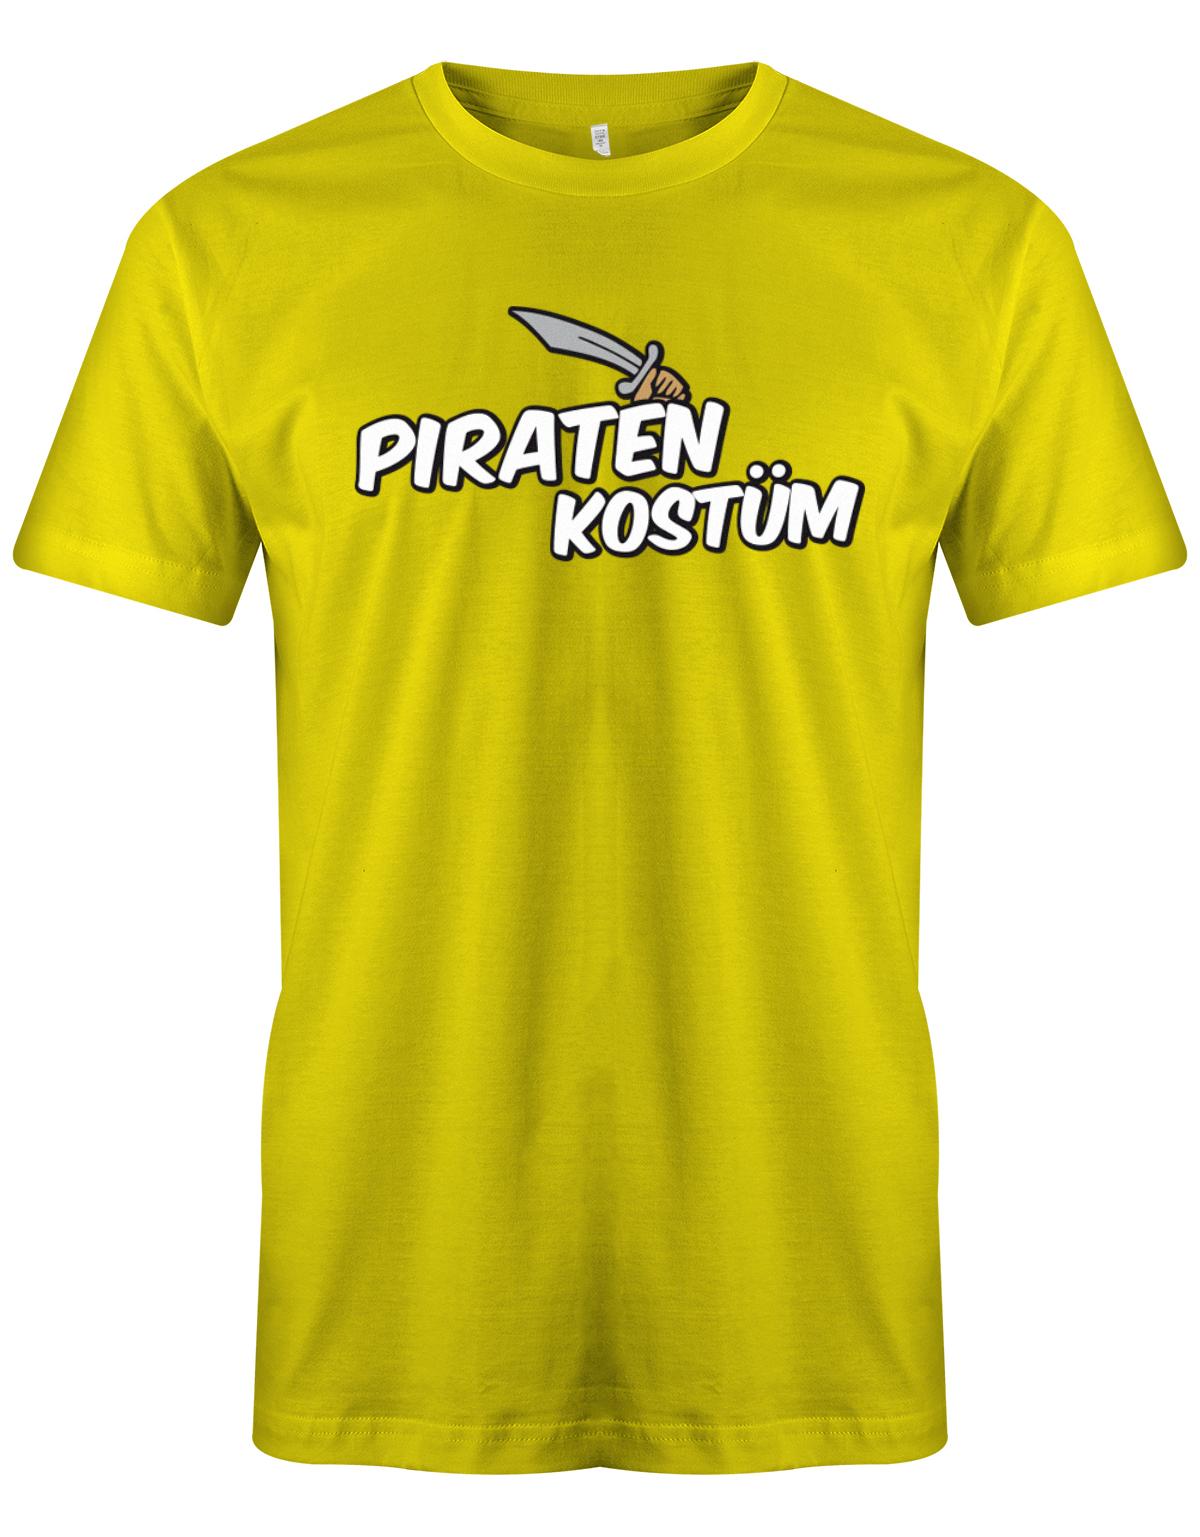 Piraten-Kost-m-Fasching-Karneval-herren-Shirt-Gelb